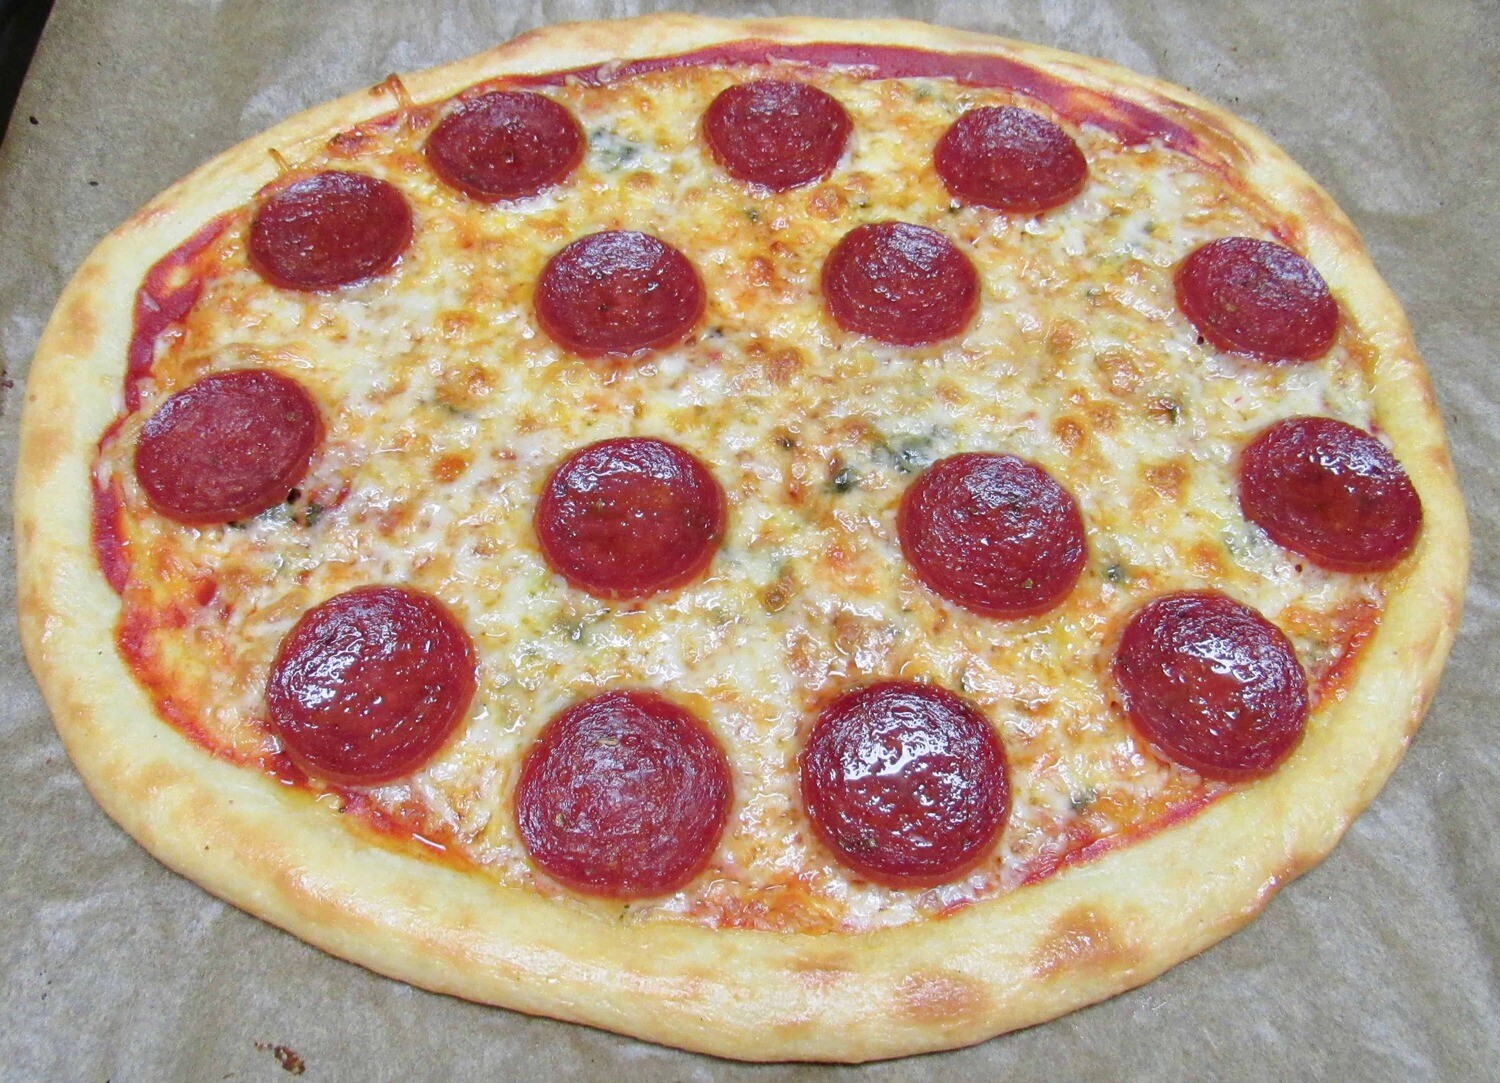 Freeman's Pizza - Pepperoni